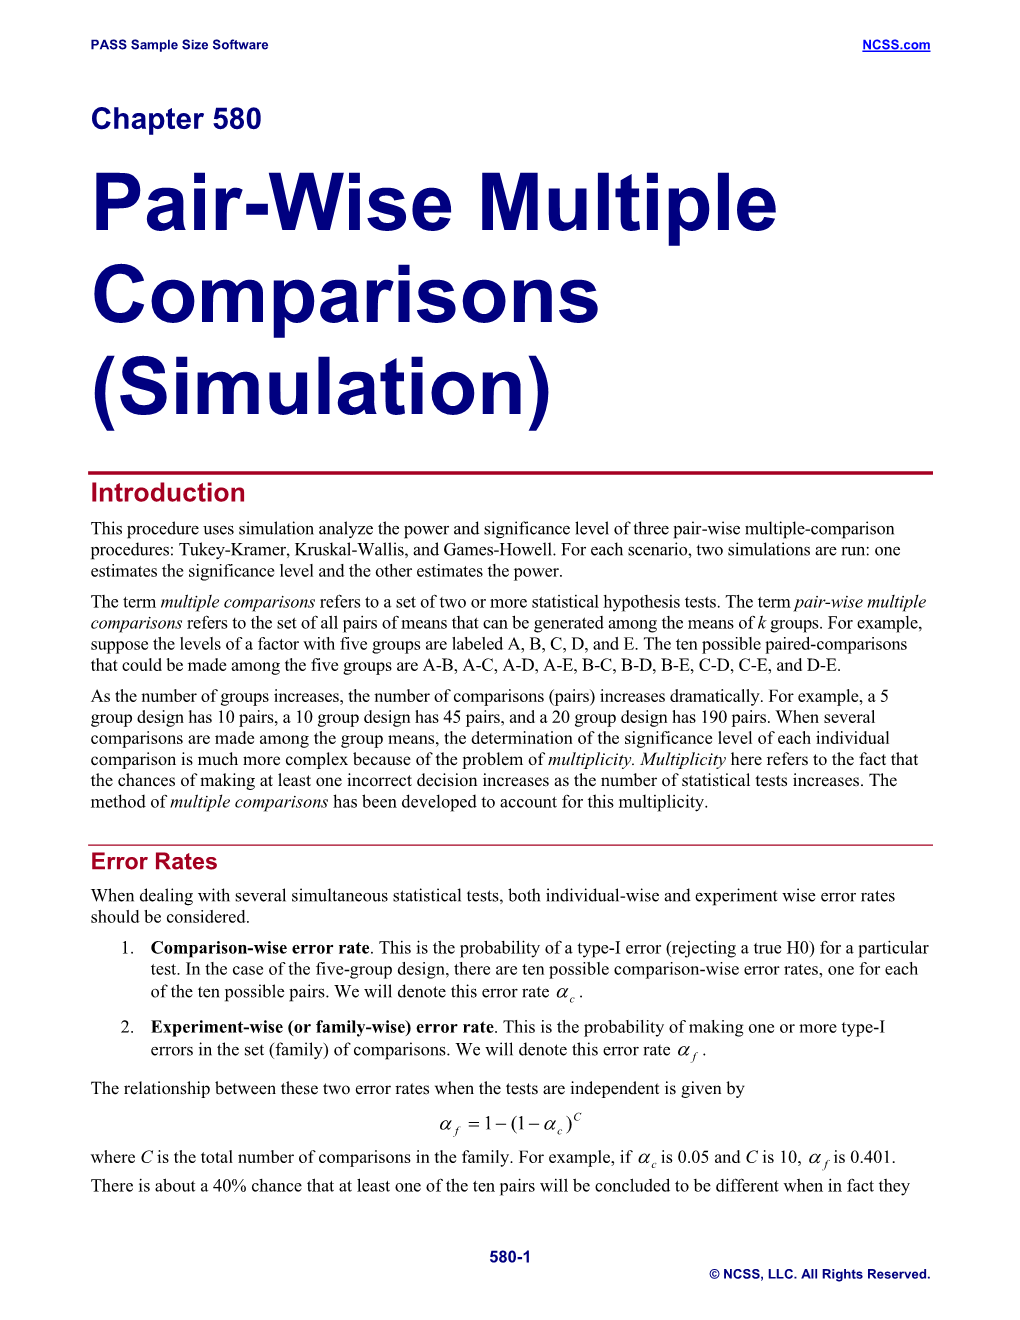 Pair-Wise Multiple Comparisons (Simulation)